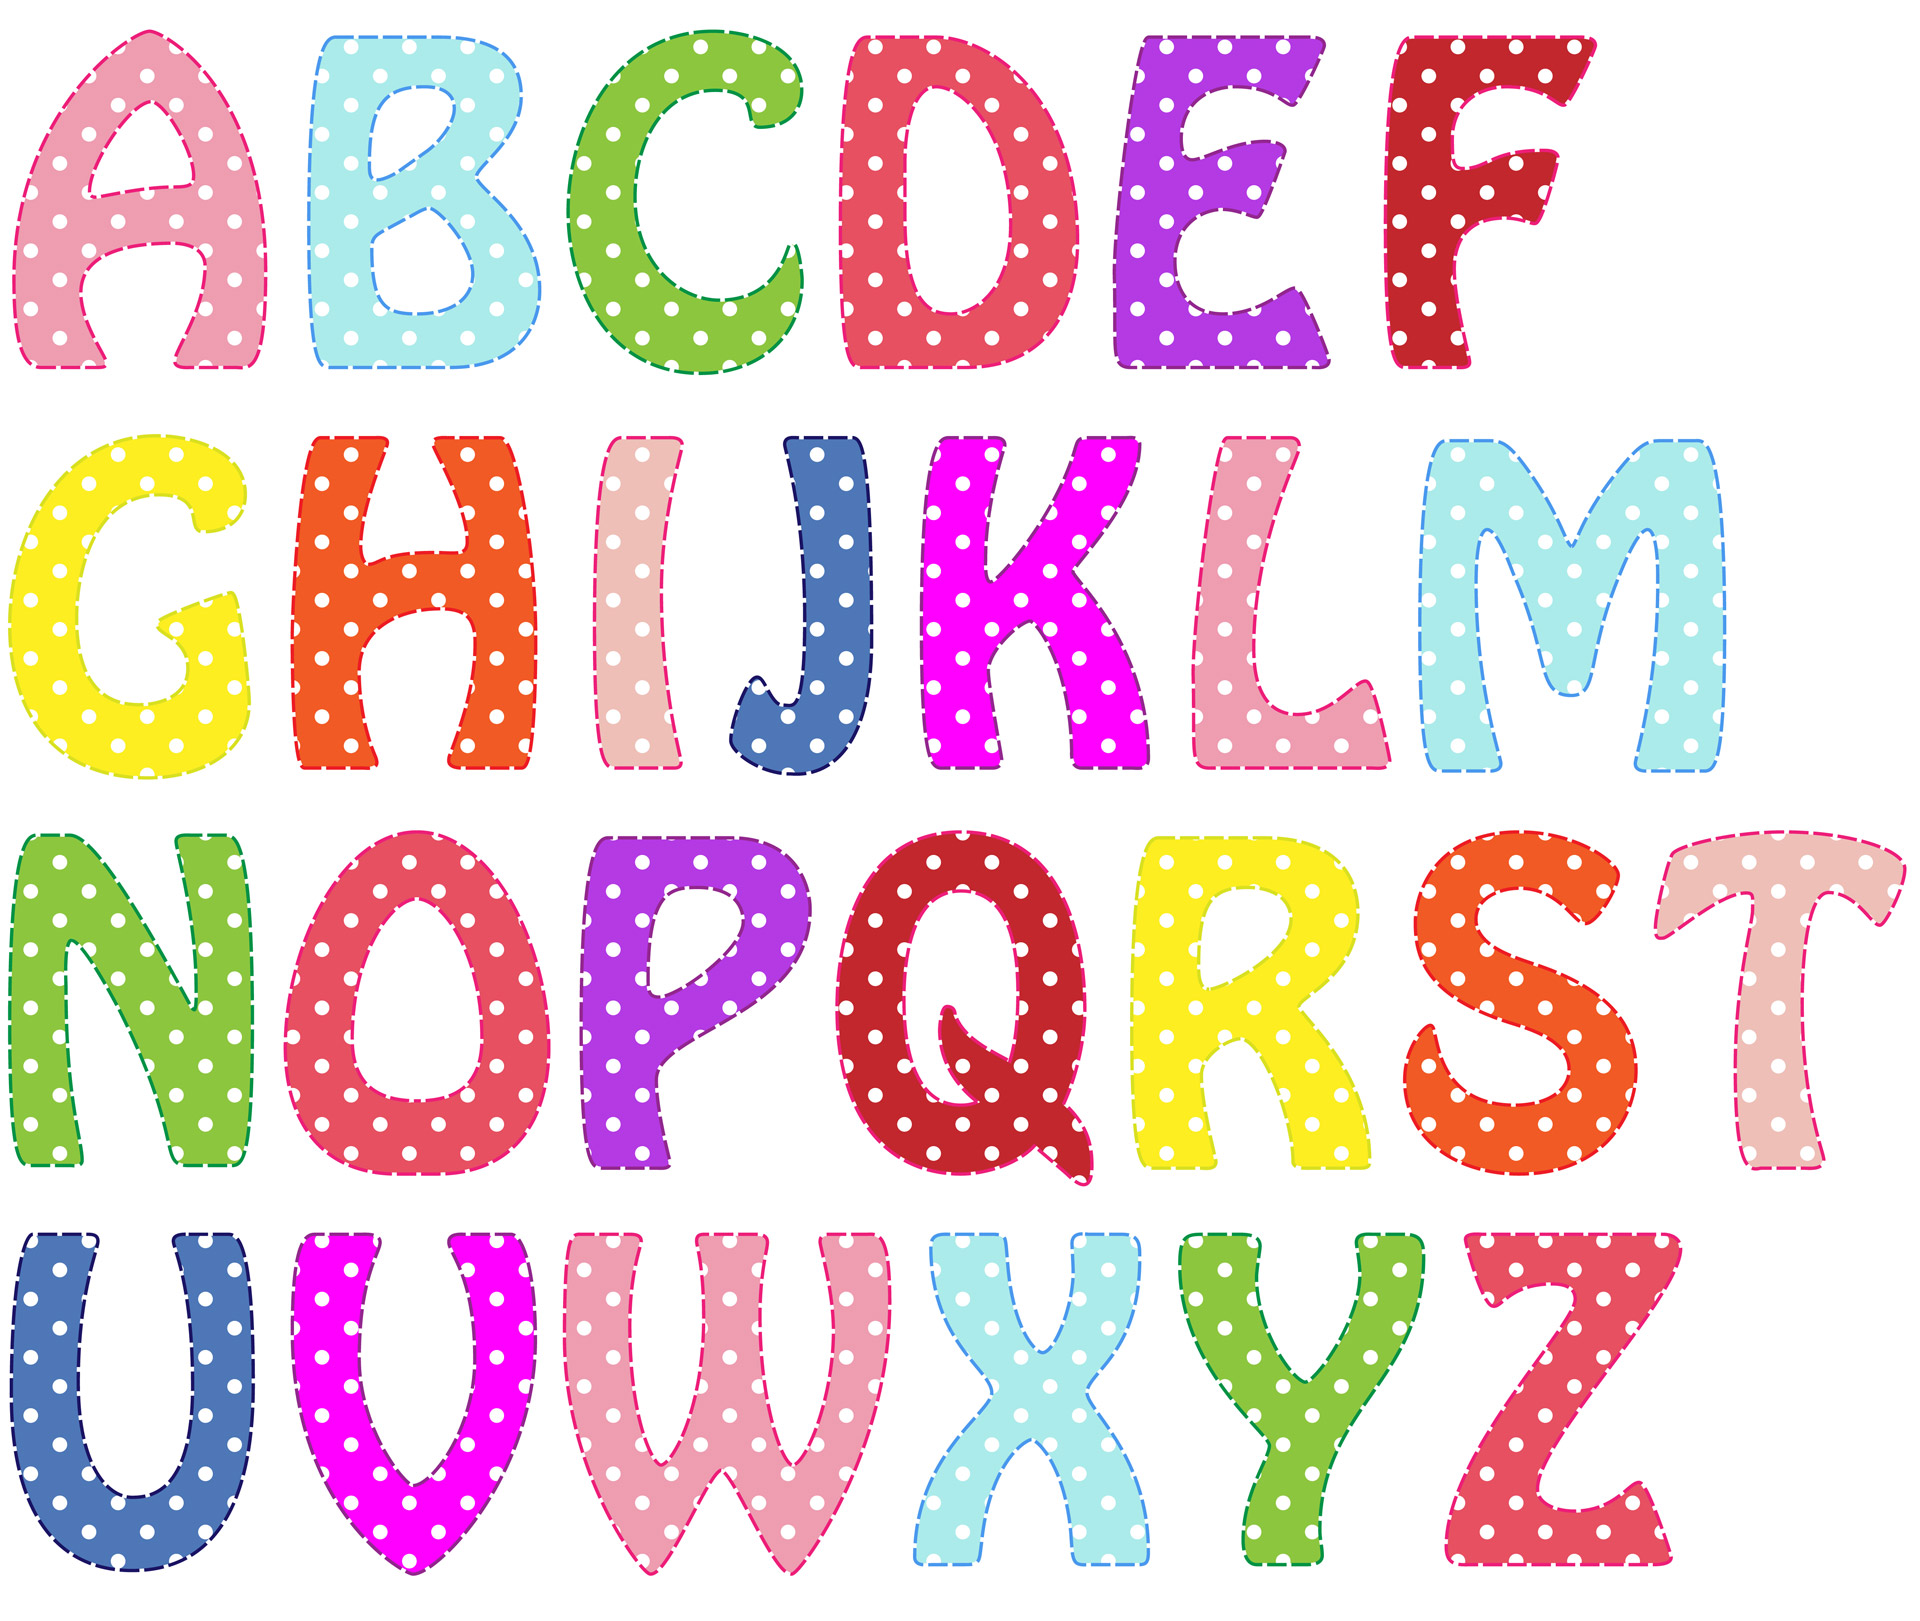 Alphabet Letters Bright Colors Free Stock Photo - Public Domain Pictures